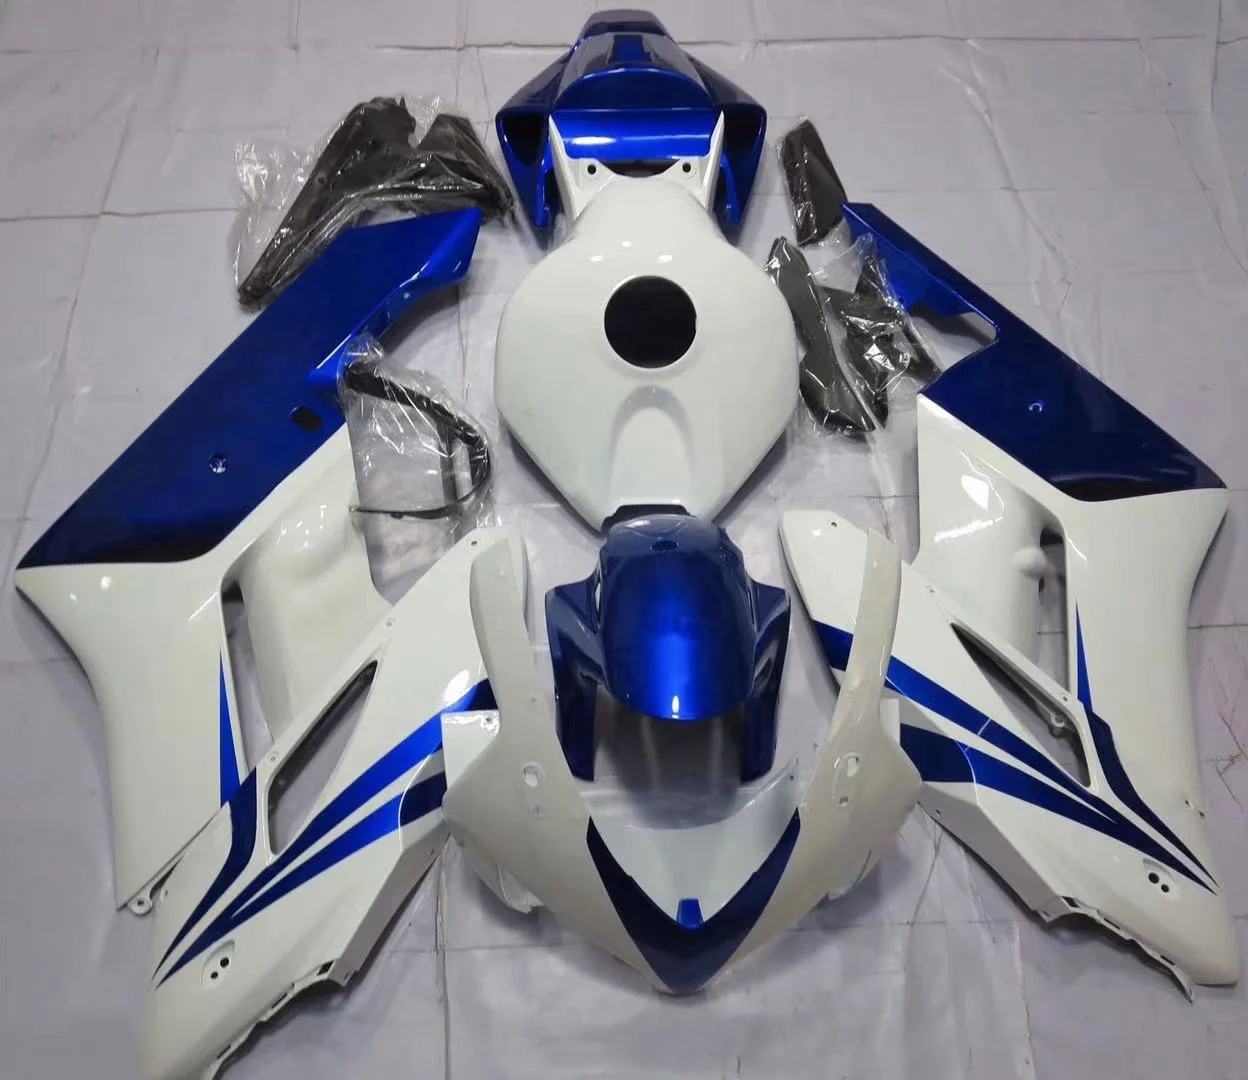 

2021 WHSC Motorcycle Fairings Kit ABS Plastic Fairing For HONDA CBR1000 2004-2005 blue white, Pictures shown